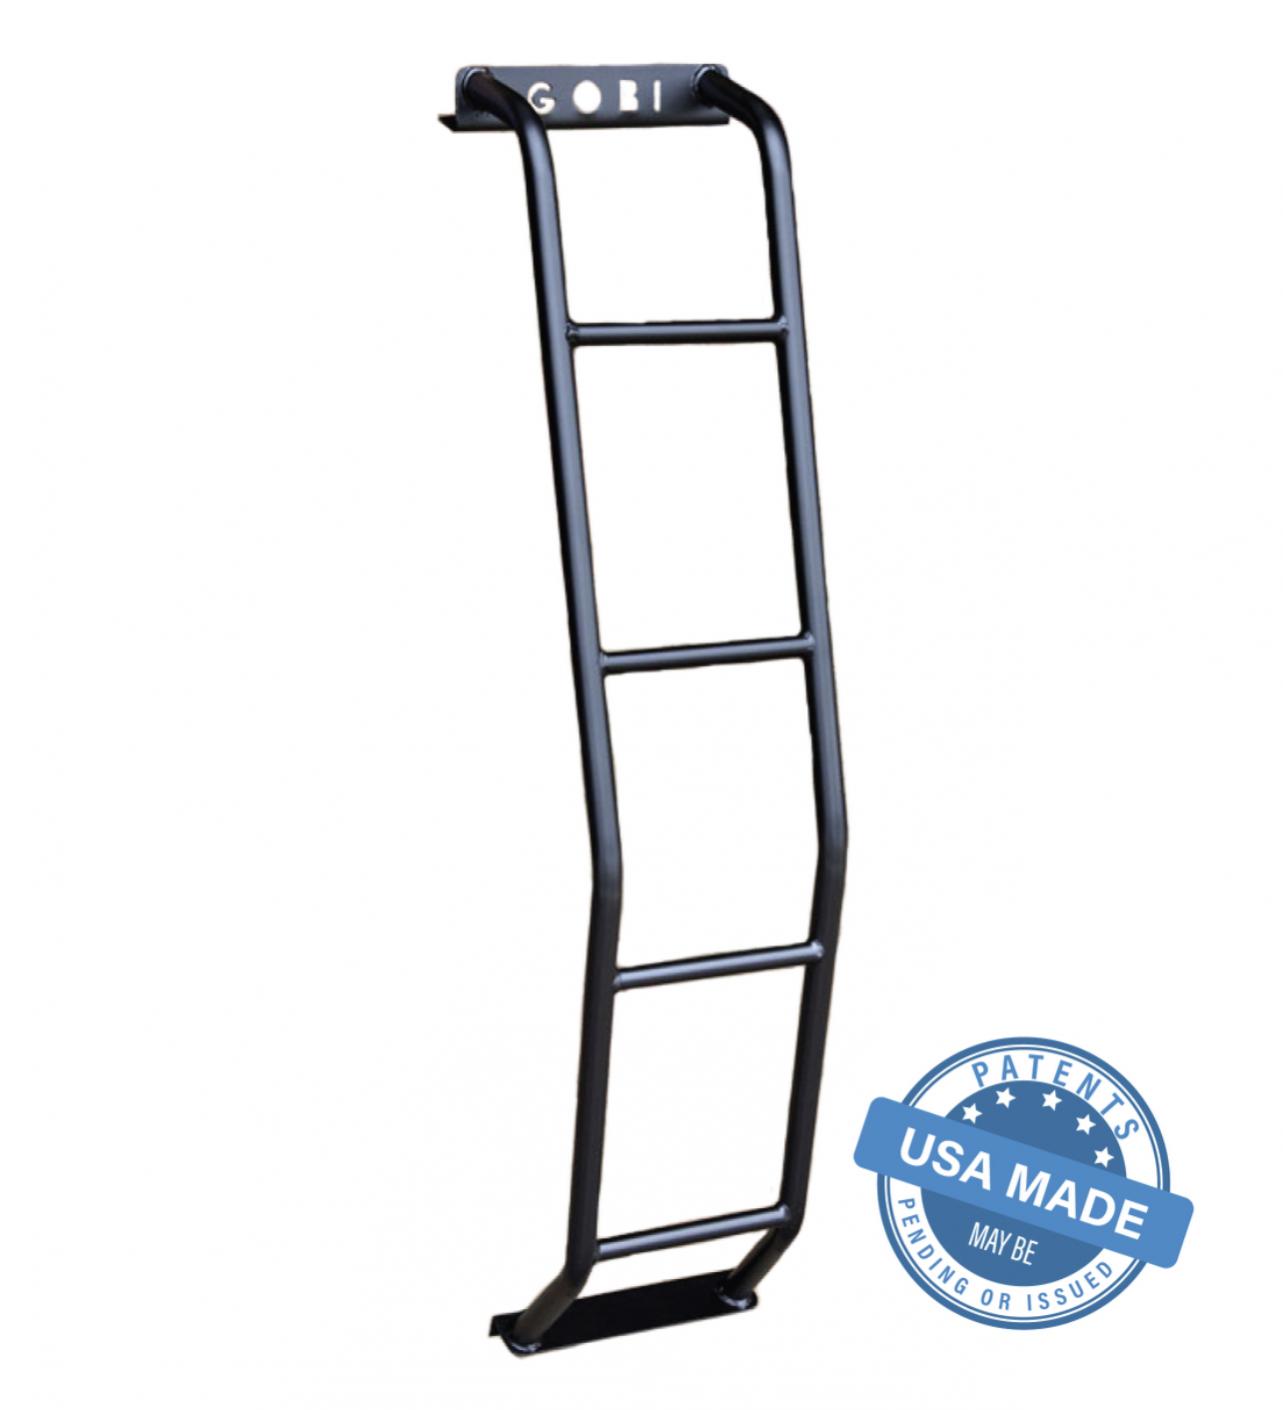 FS: NEW GOBI Ladder - 3RD Gen - San Jose, CA 0-img_0520-jpg